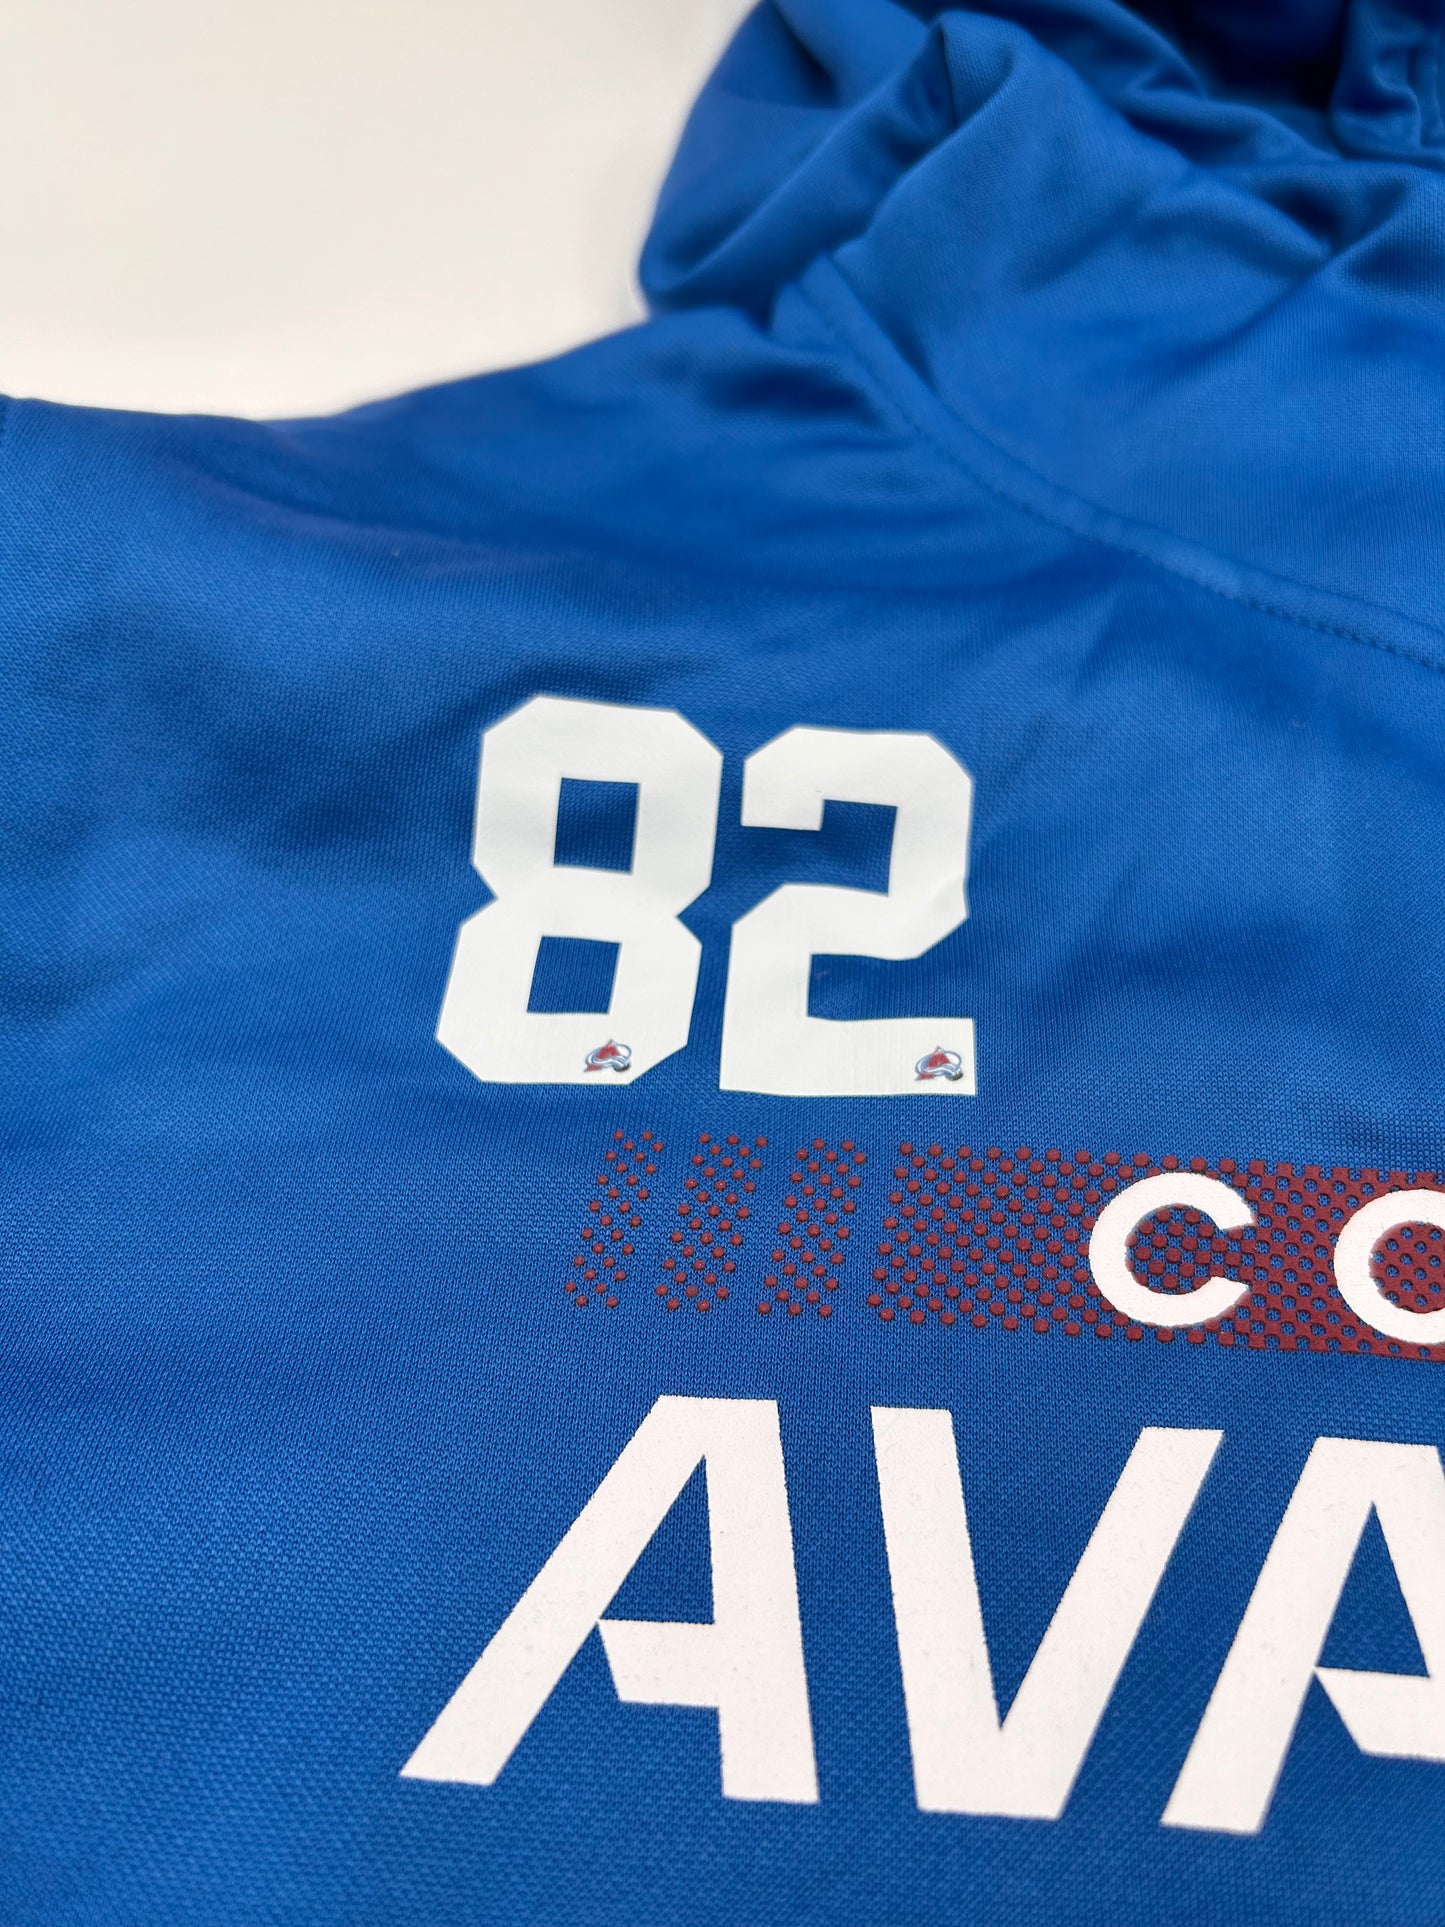 2022 Colorado Avalanche "Baby Blue" Player Worn Sweatshirts